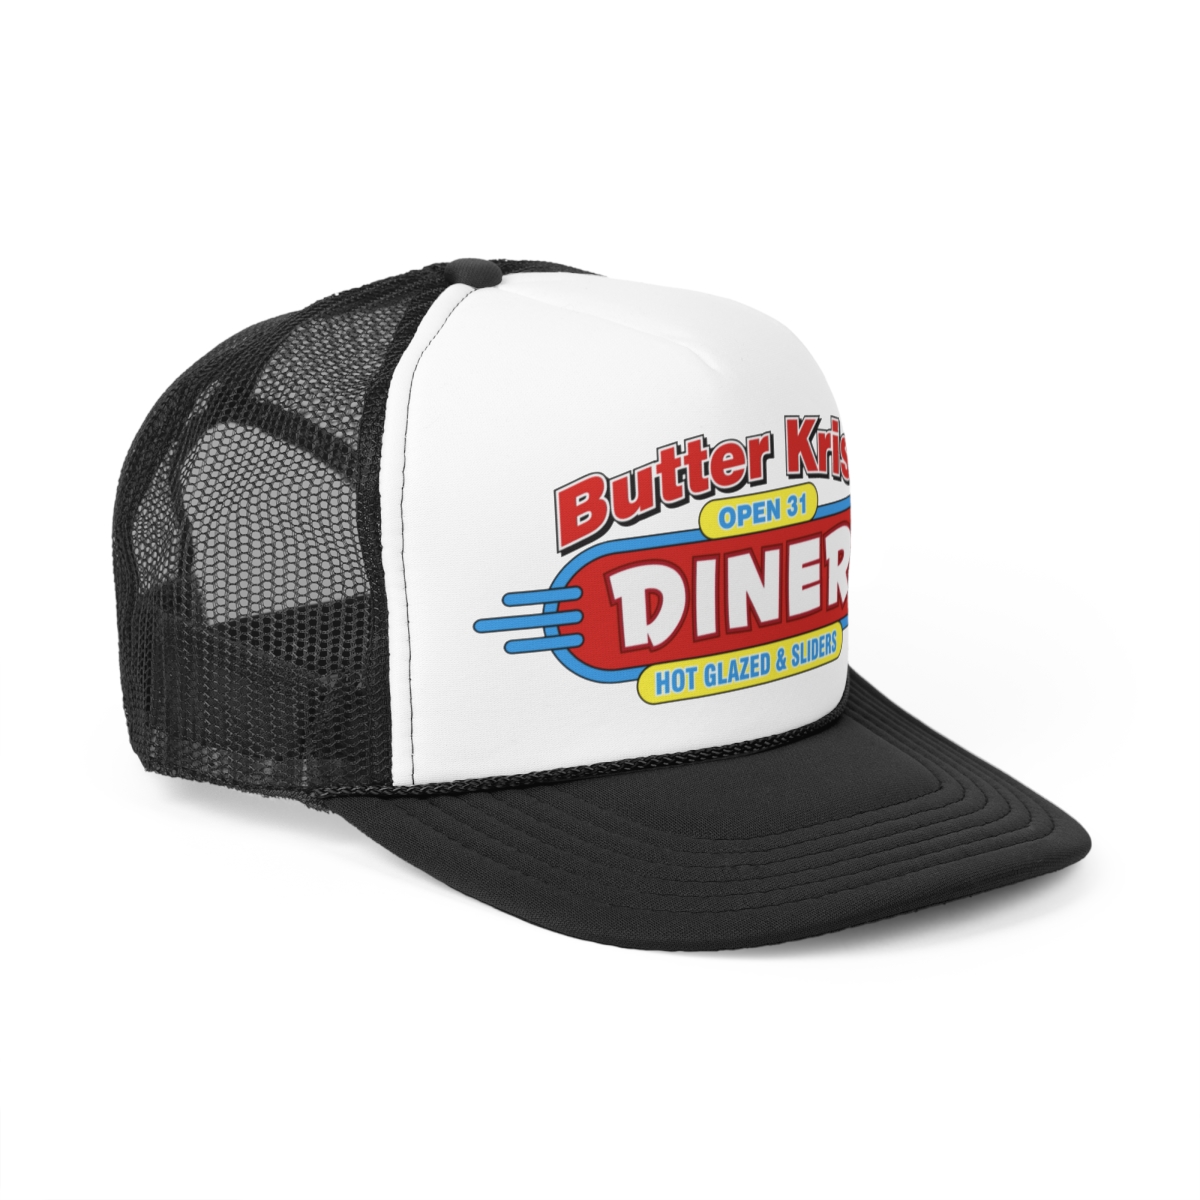 BKD Trucker Hat product thumbnail image